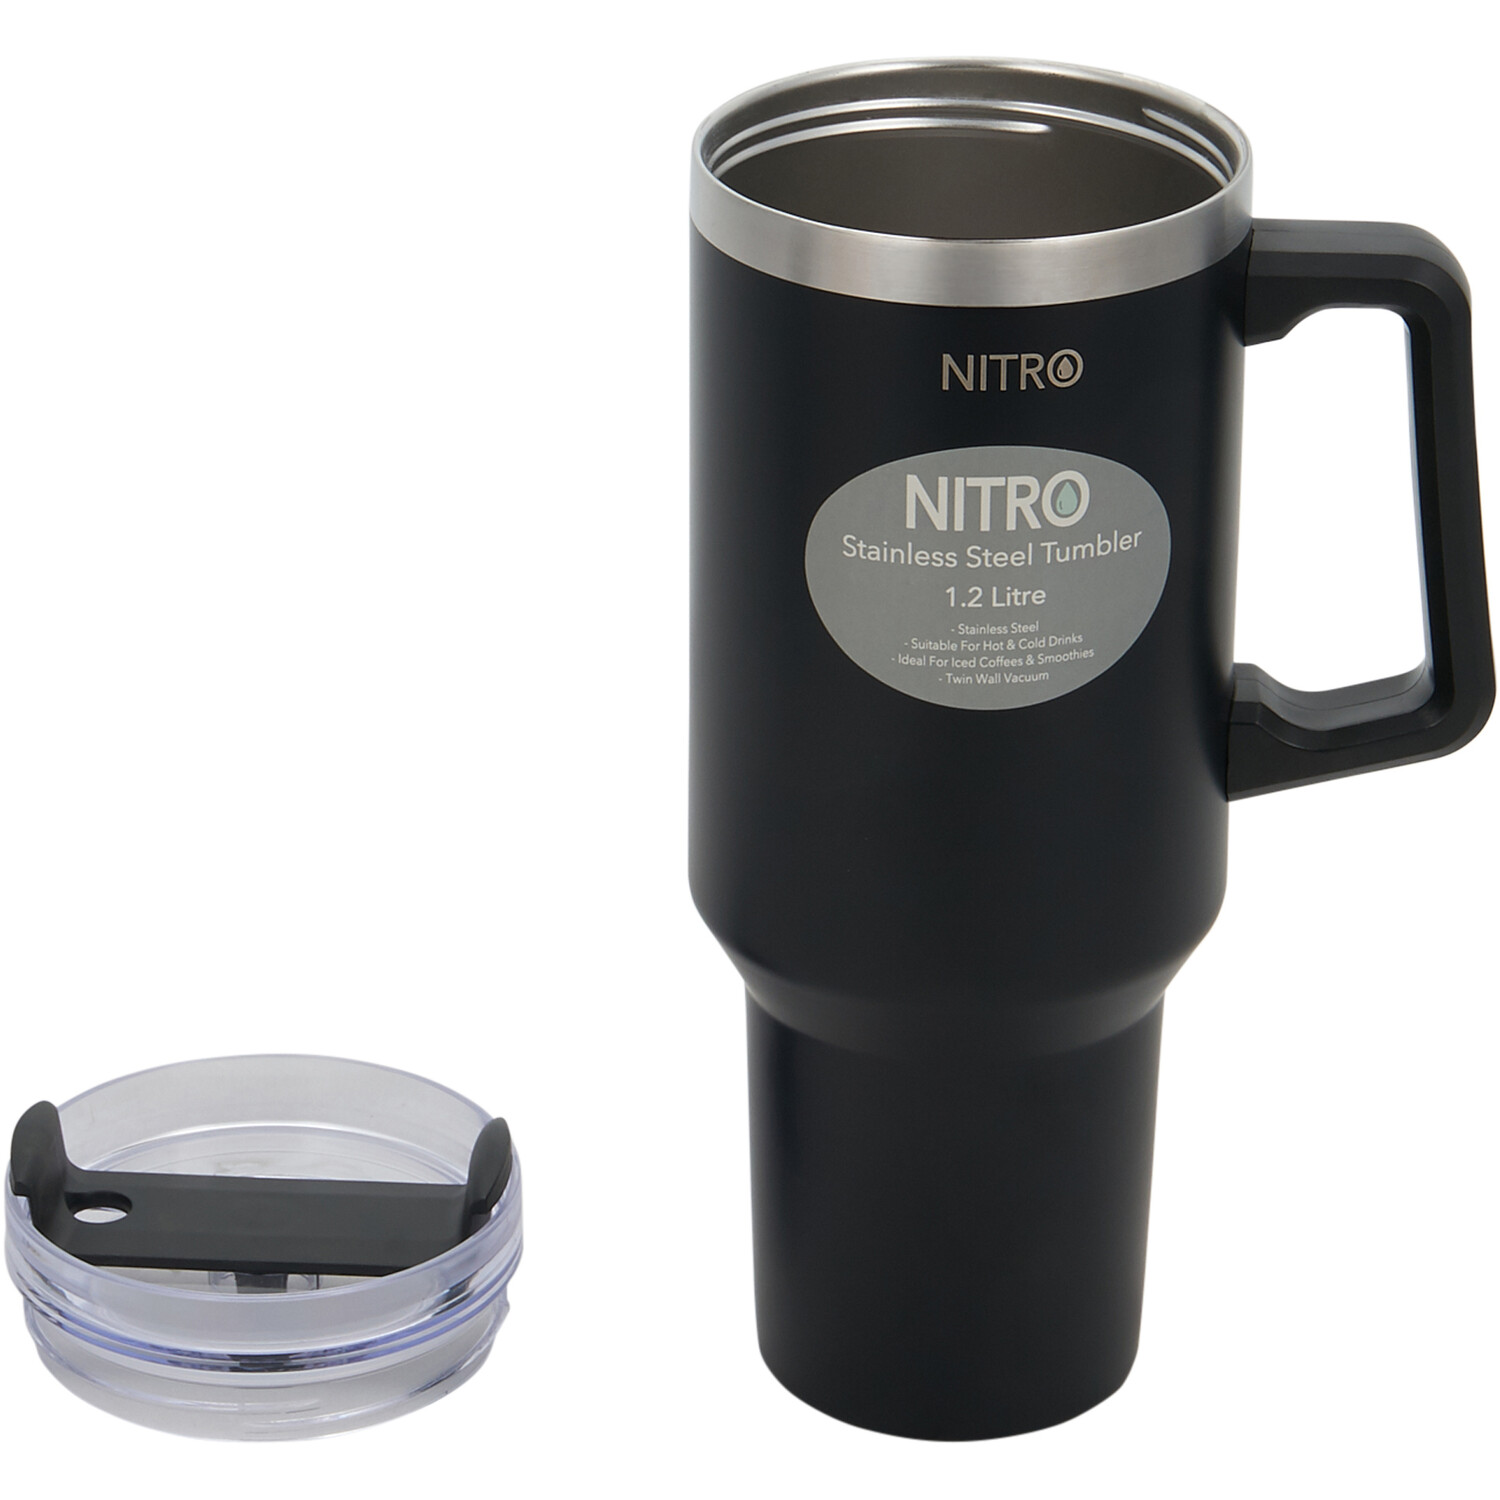 Nitro 1.2L Stainless Steel Tumbler - Black Image 5